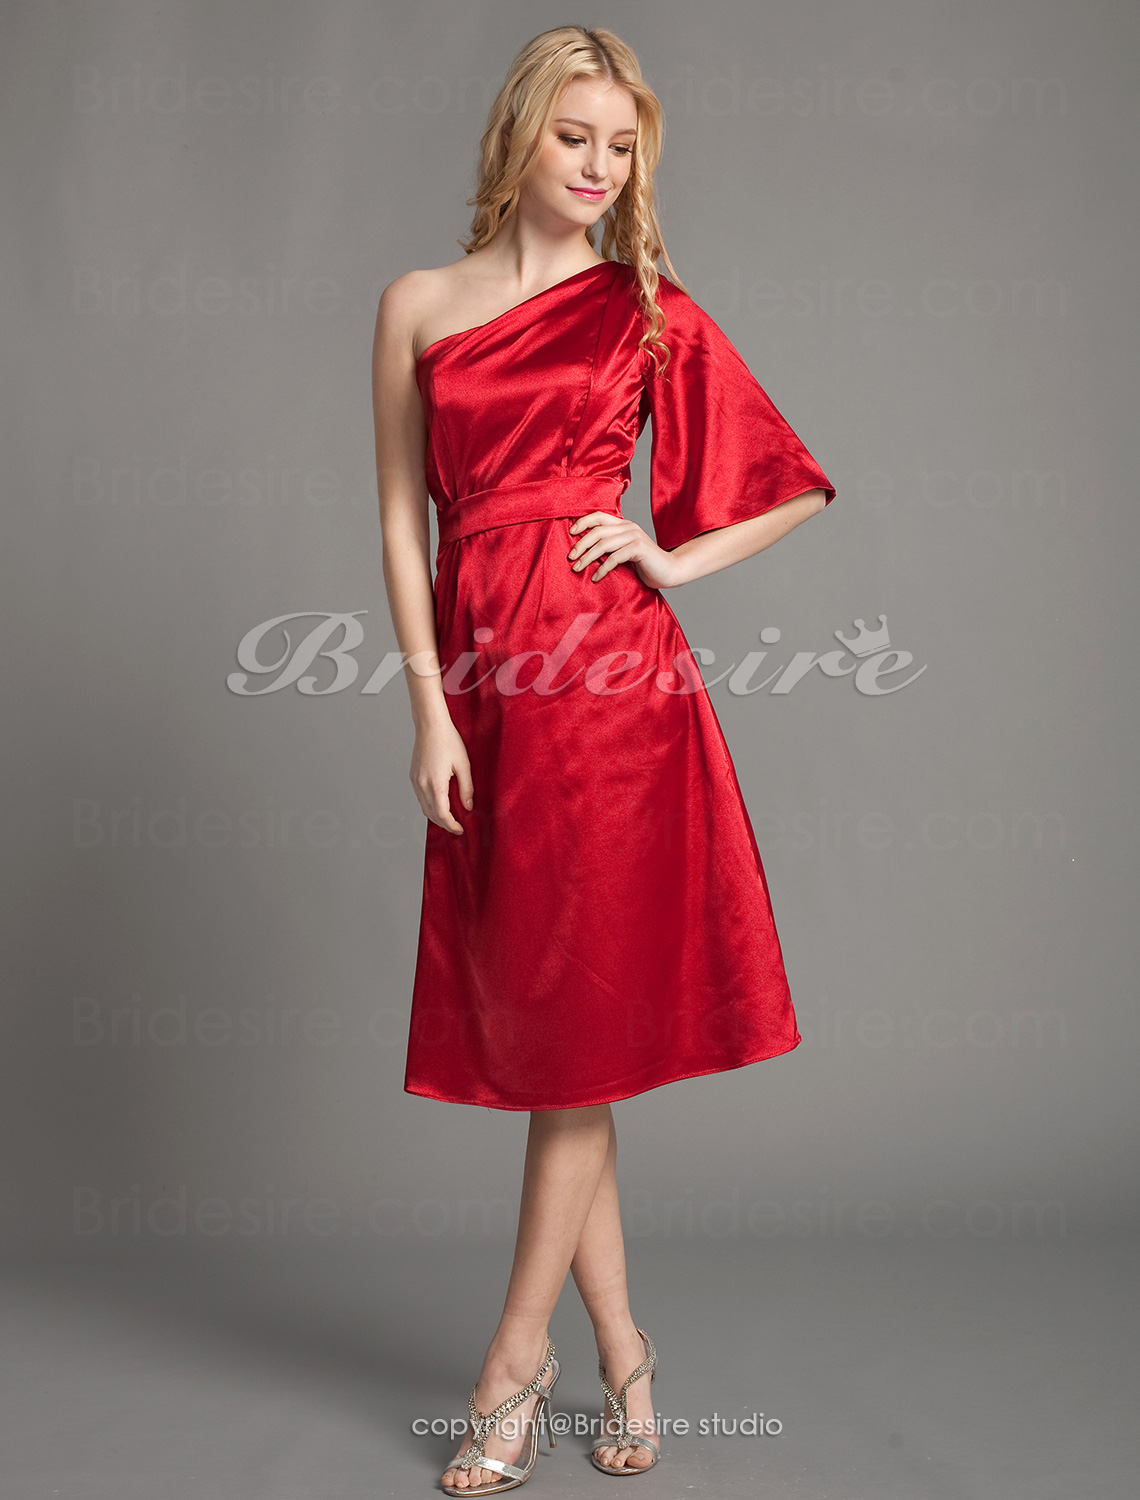 Sheath/ Column Charmeuse Knee-length One Shoulder Bridesmaid Dress